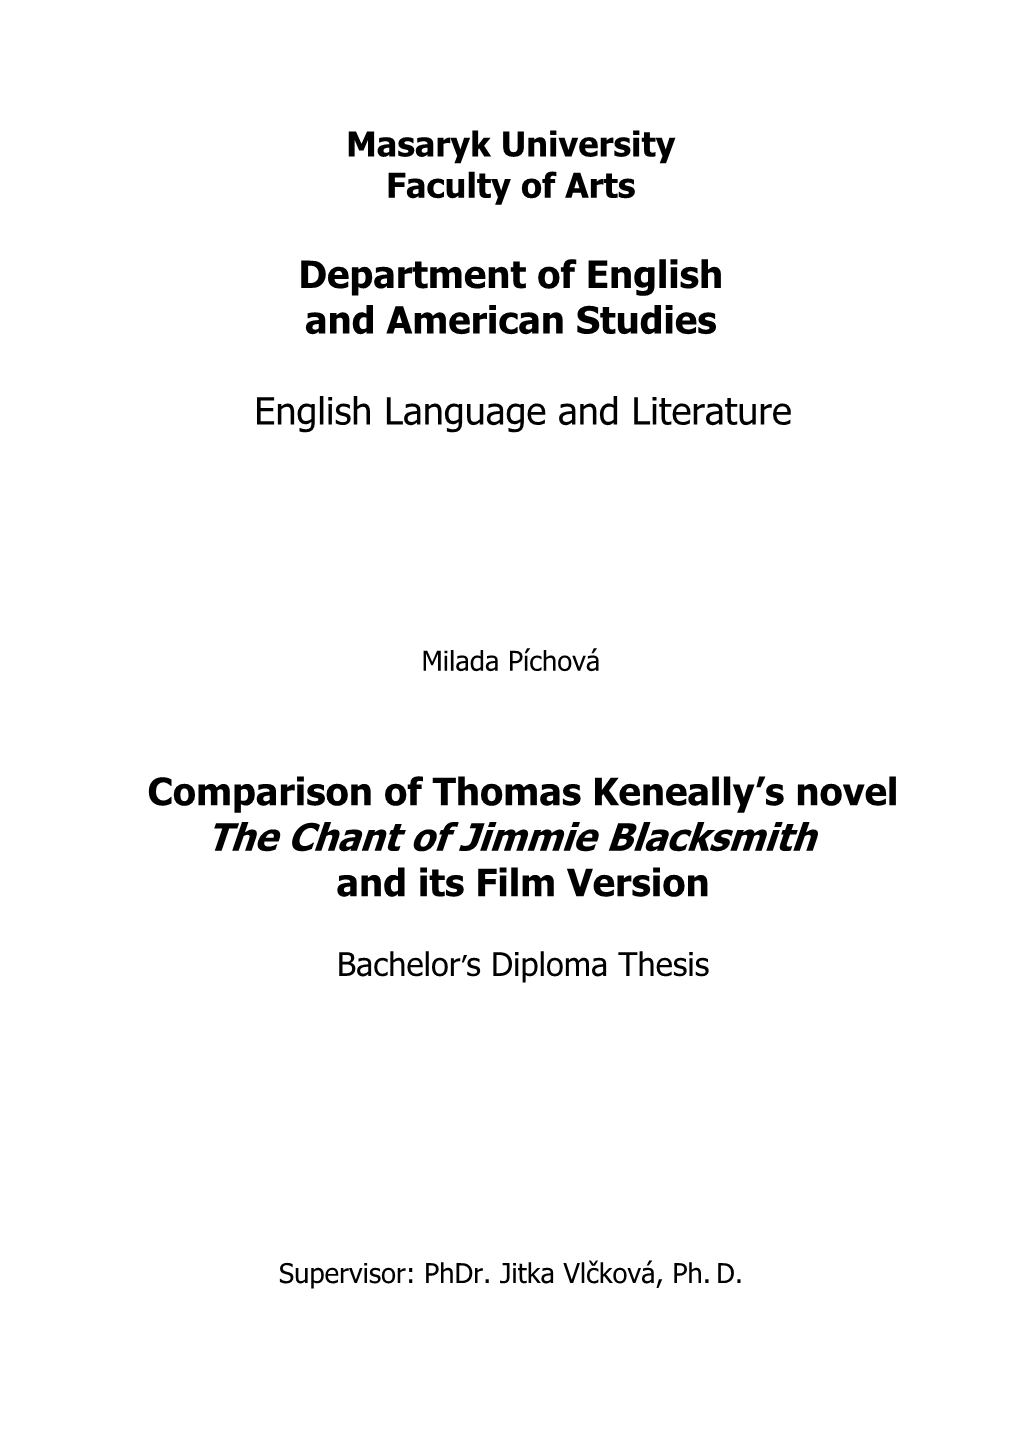 The Chant of Jimmie Blacksmith and Its Film Version � Bachelor ’S�Diploma�Thesis� � � � � � � Supervisor:�Phdr.�Jitka�Vlčková,�Ph